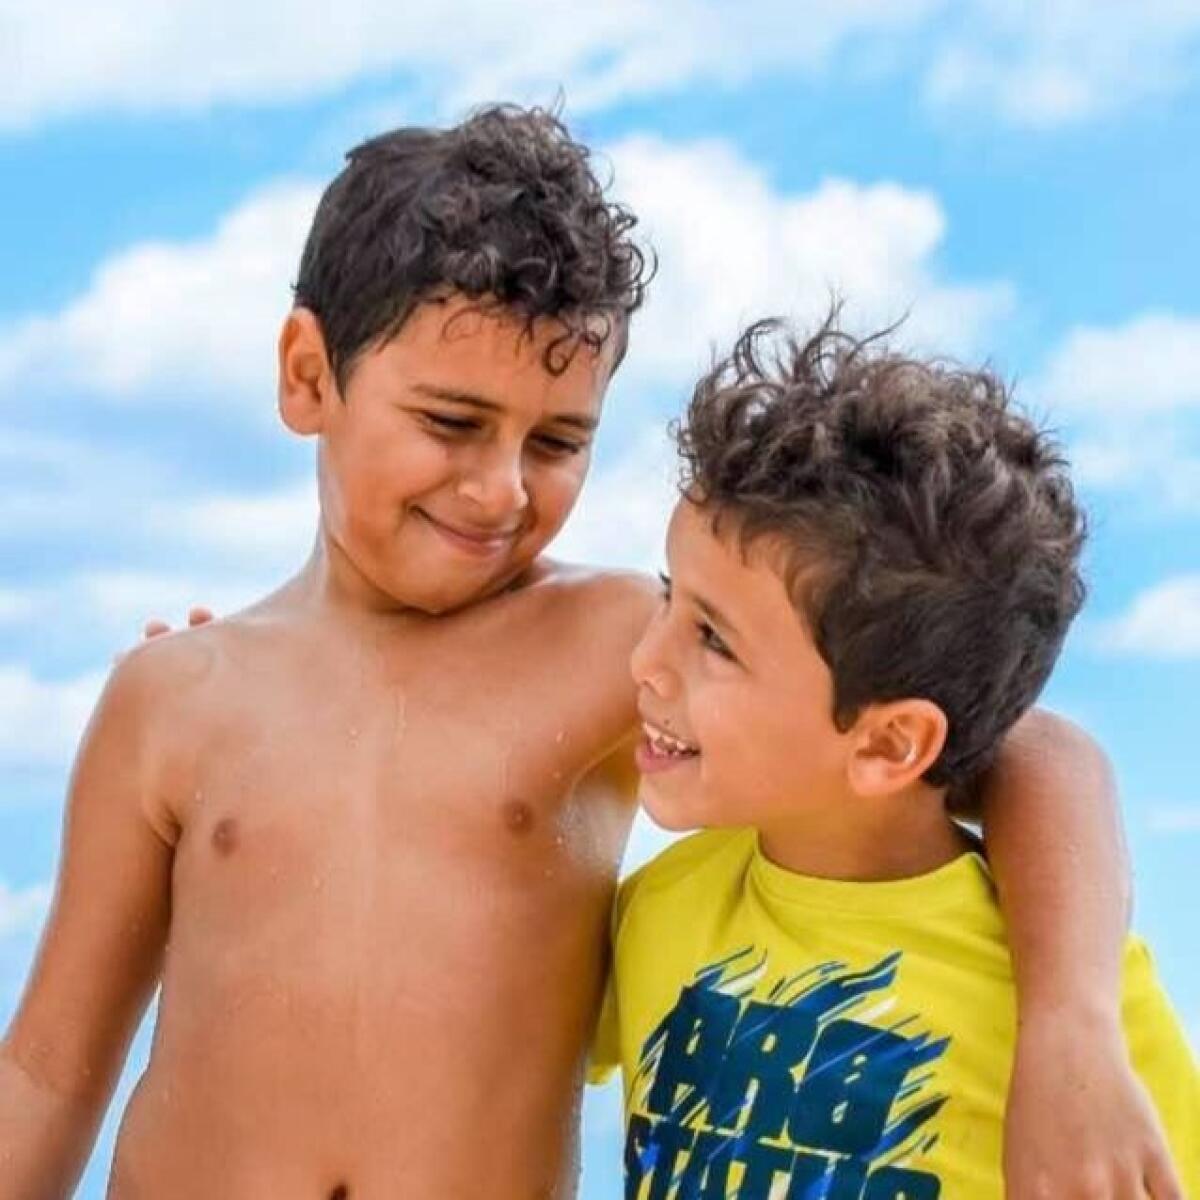 Mark Iskander, 11, and his brother Jacob Iskander, 8